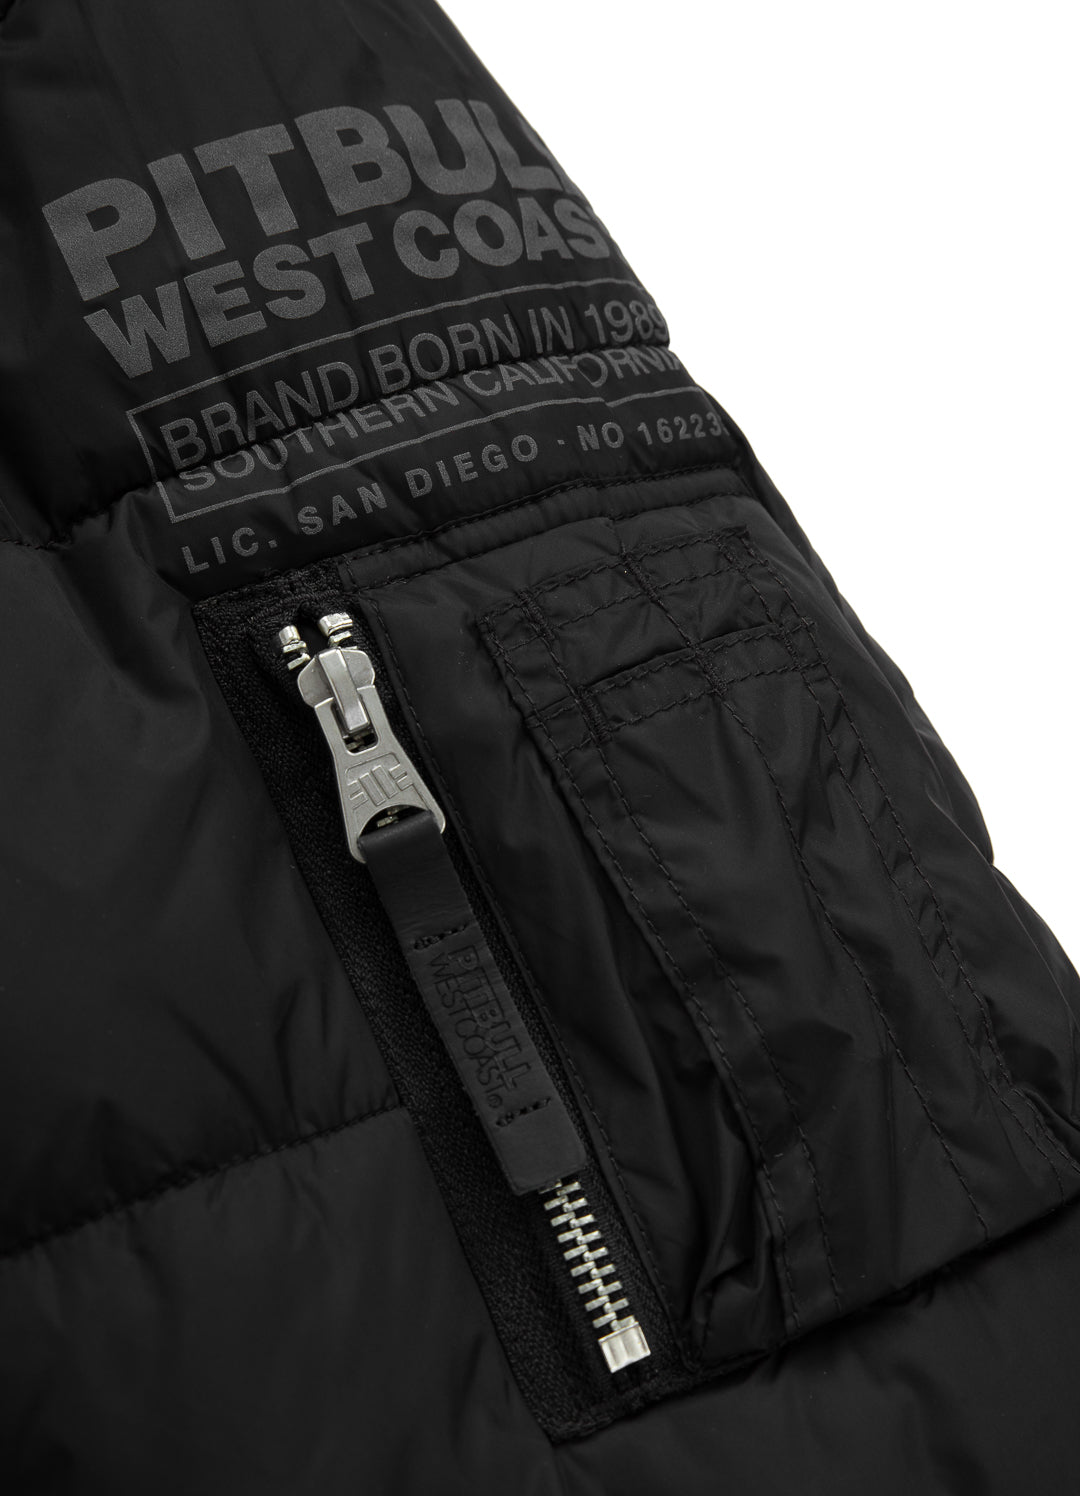 Padded Jacket Topside 2 Black - Pitbull West Coast International Store 